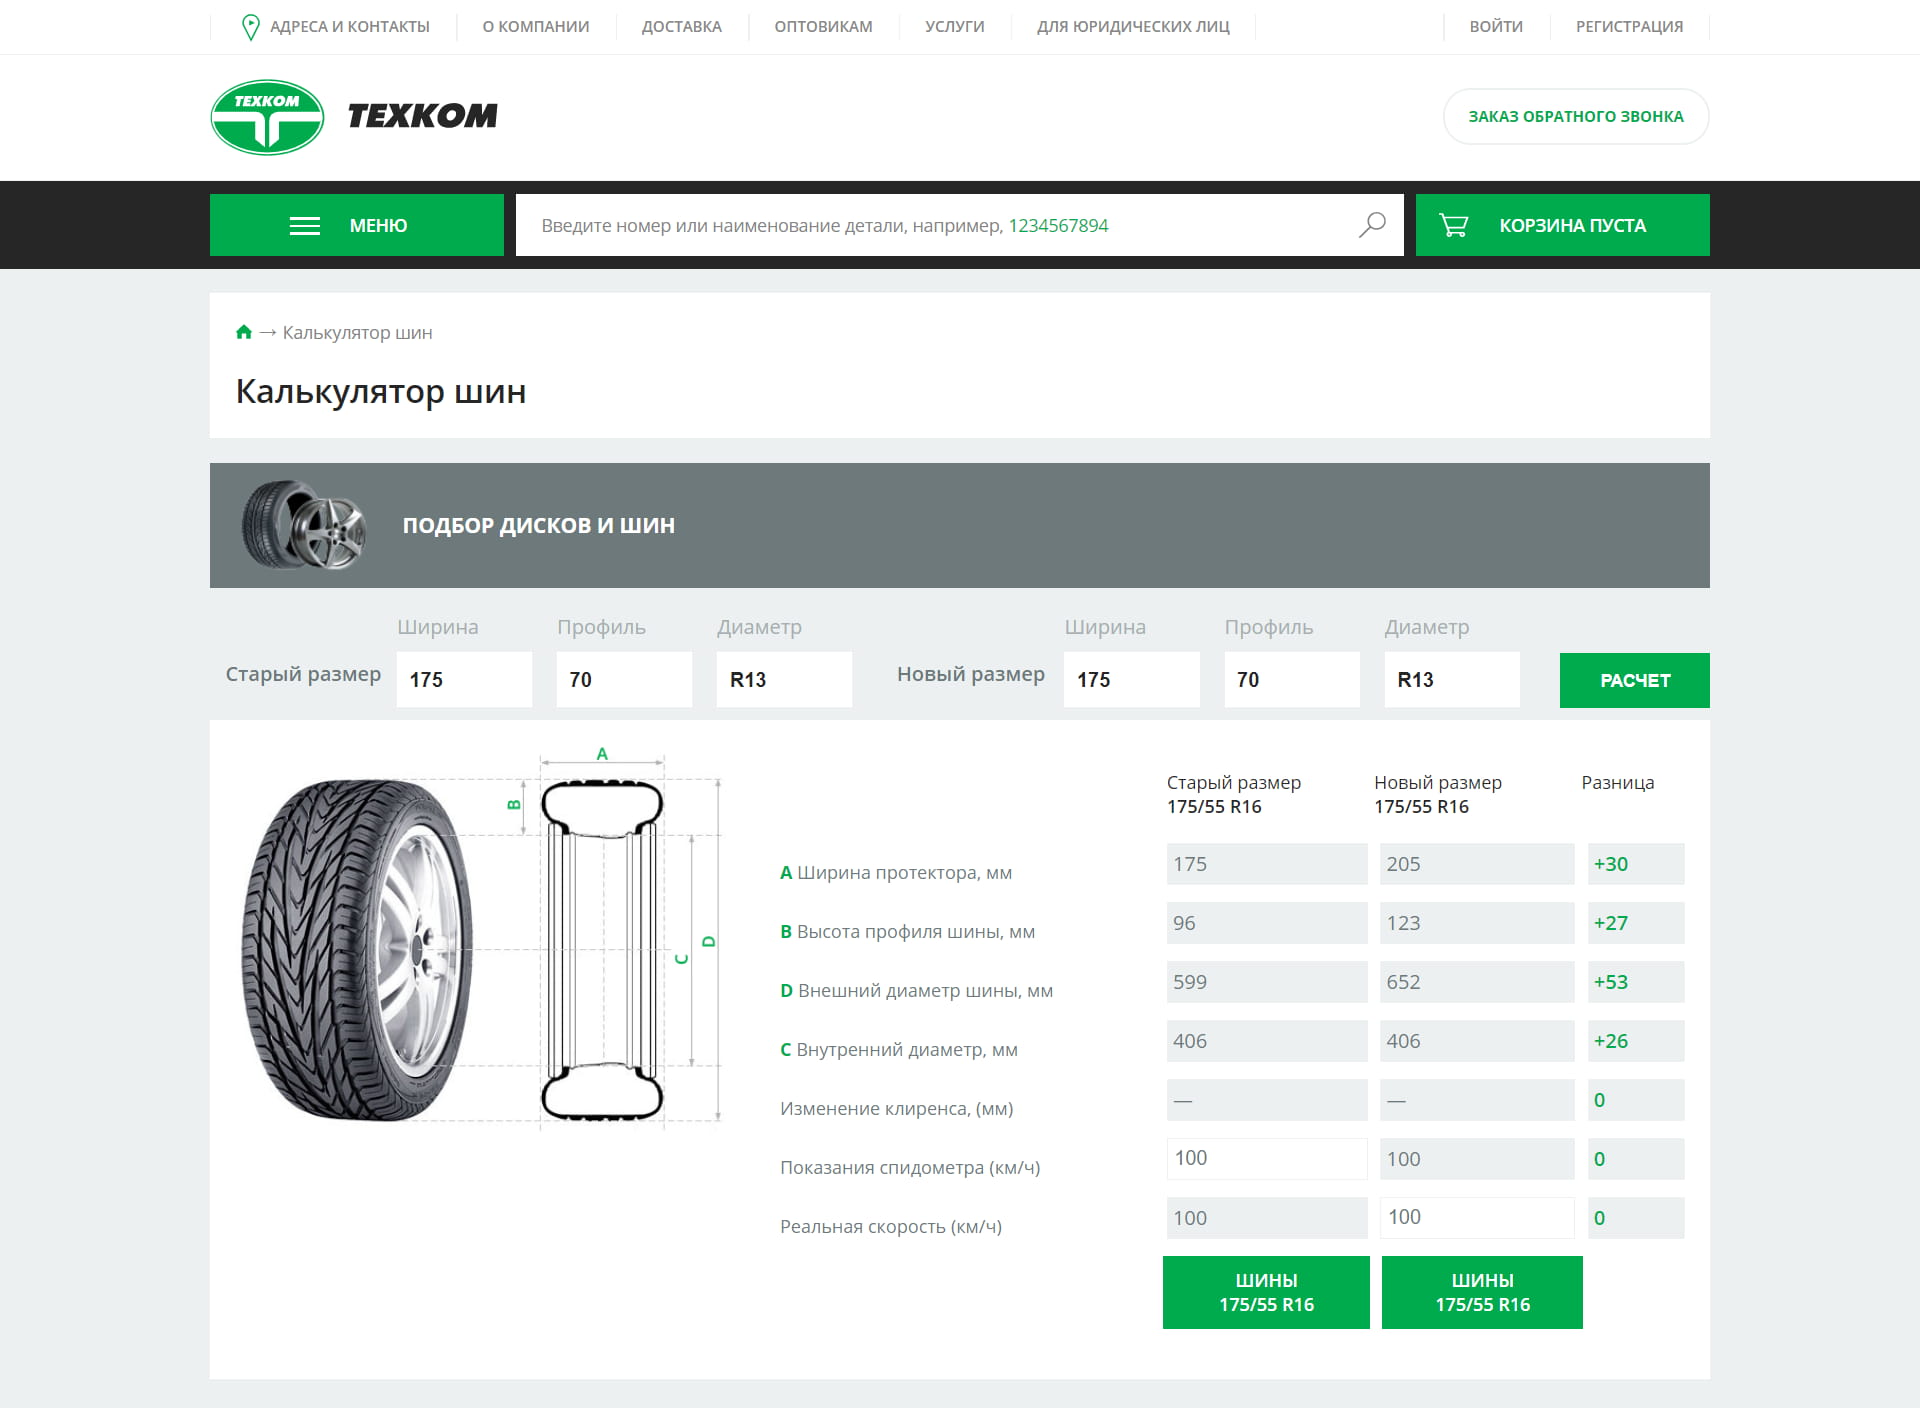 Texkom – онлайн-магазин автозапчастин5